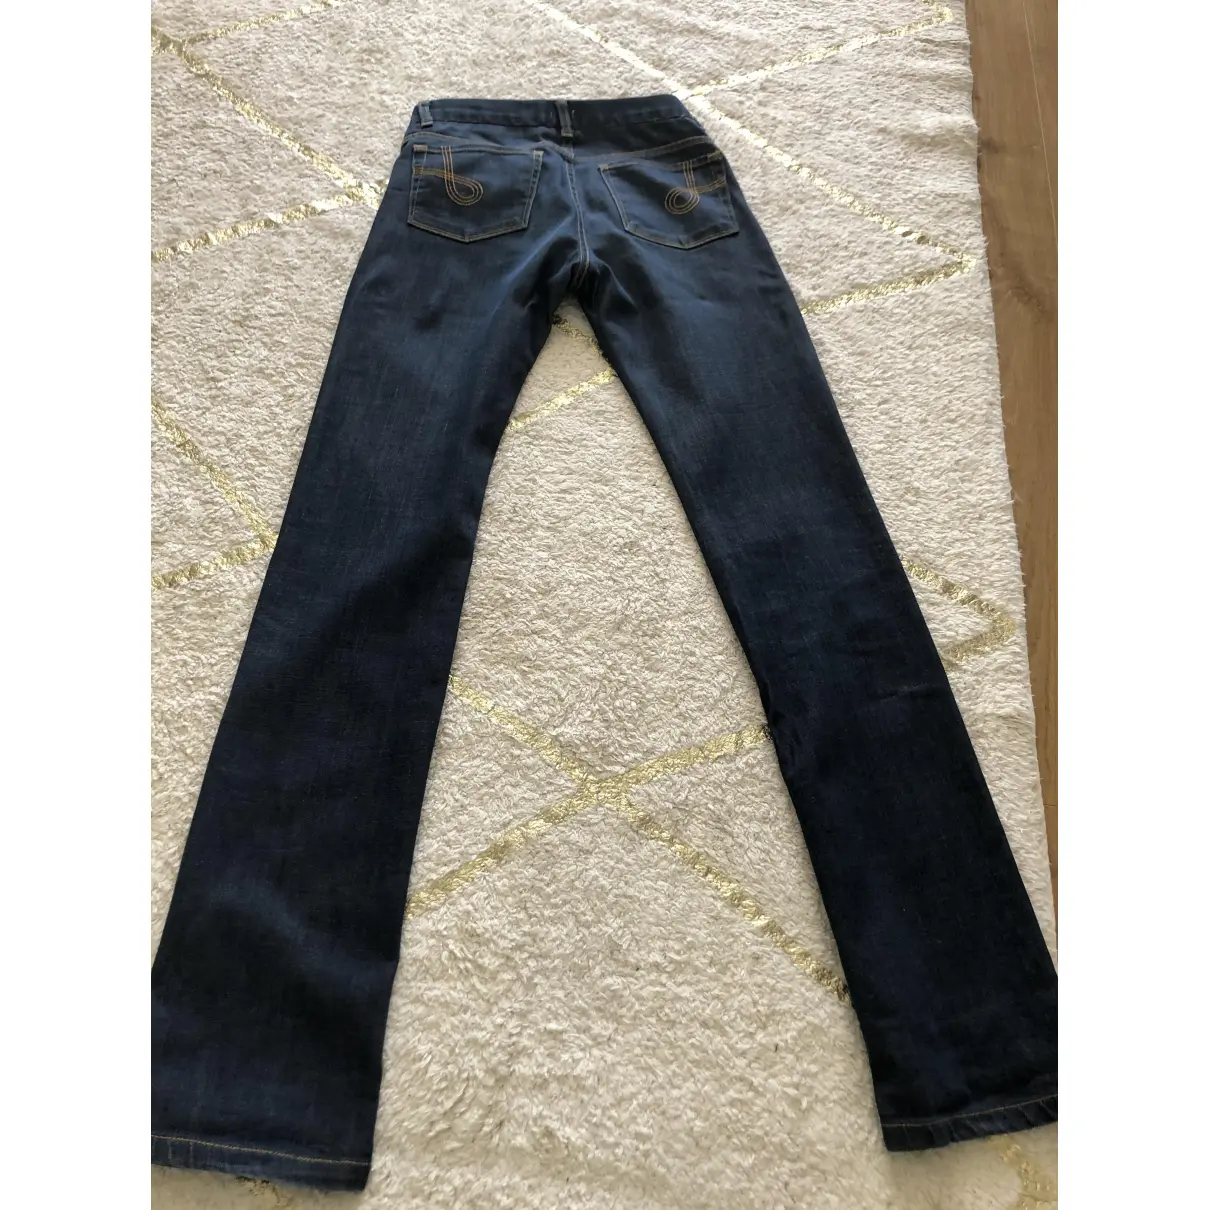 Buy Joseph Straight jeans online